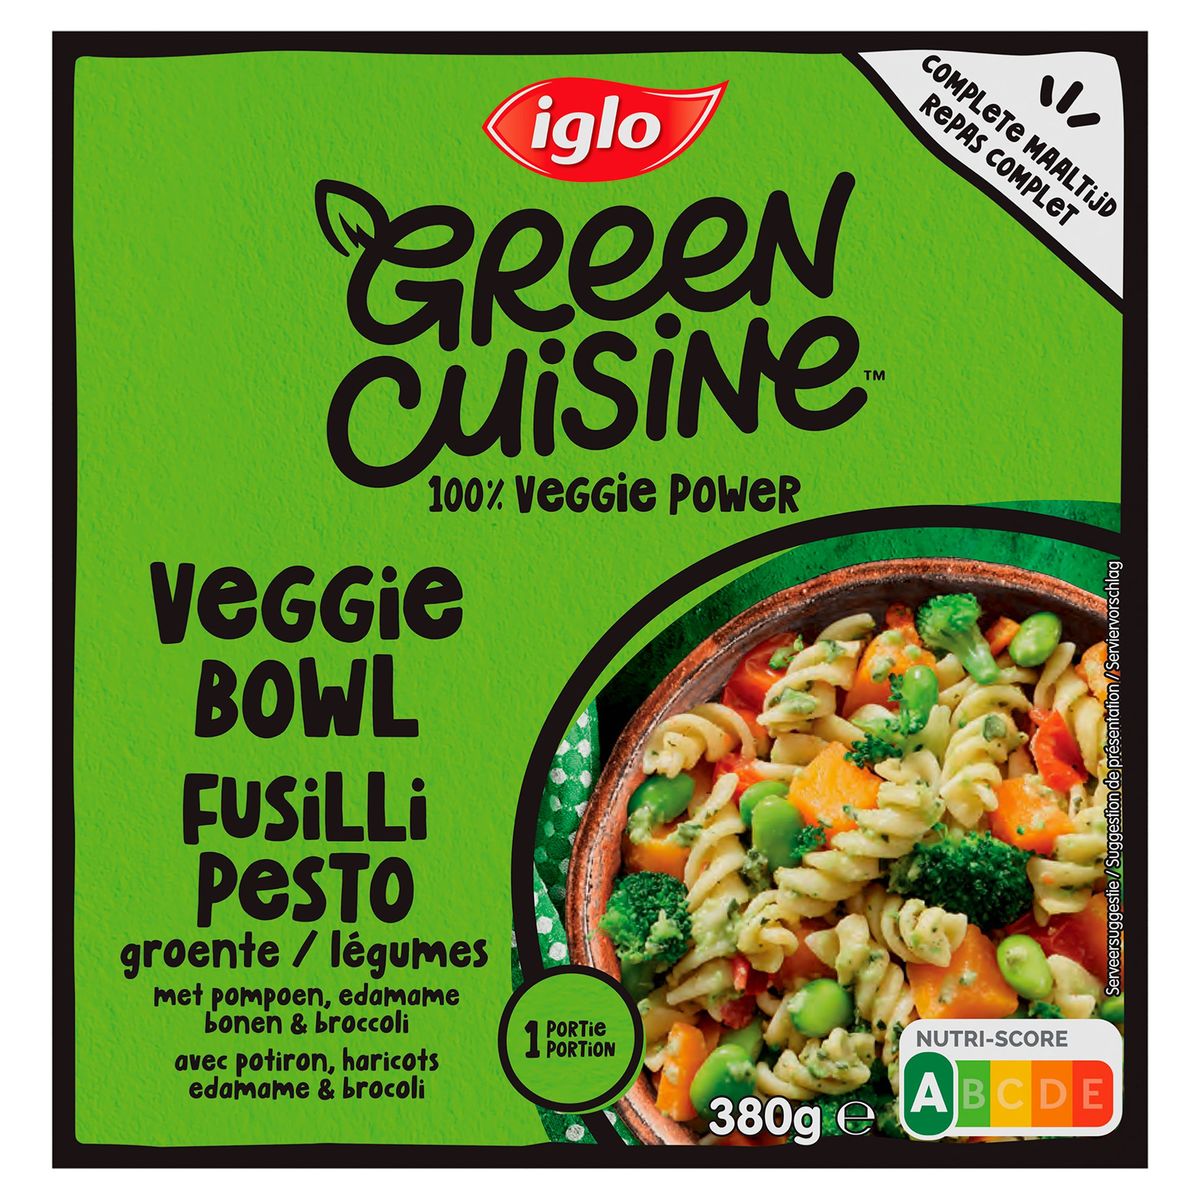 Iglo Green Cuisine Veggie Bowl Fusilli Pesto Groente x1 portie 380 g